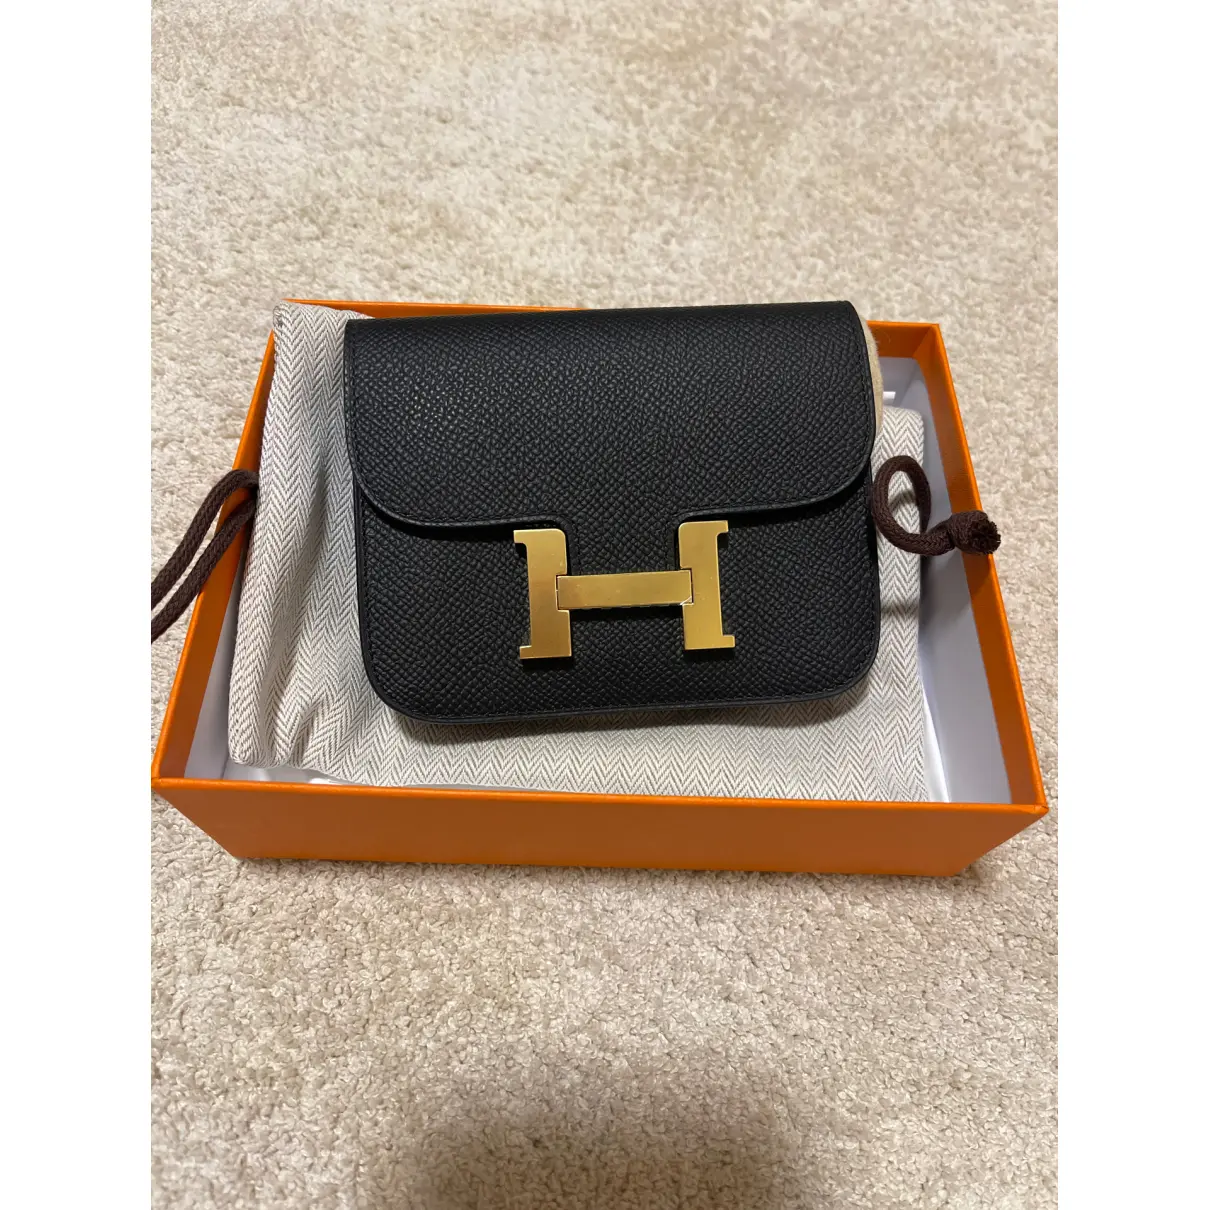 Buy Hermès Constance leather clutch bag online